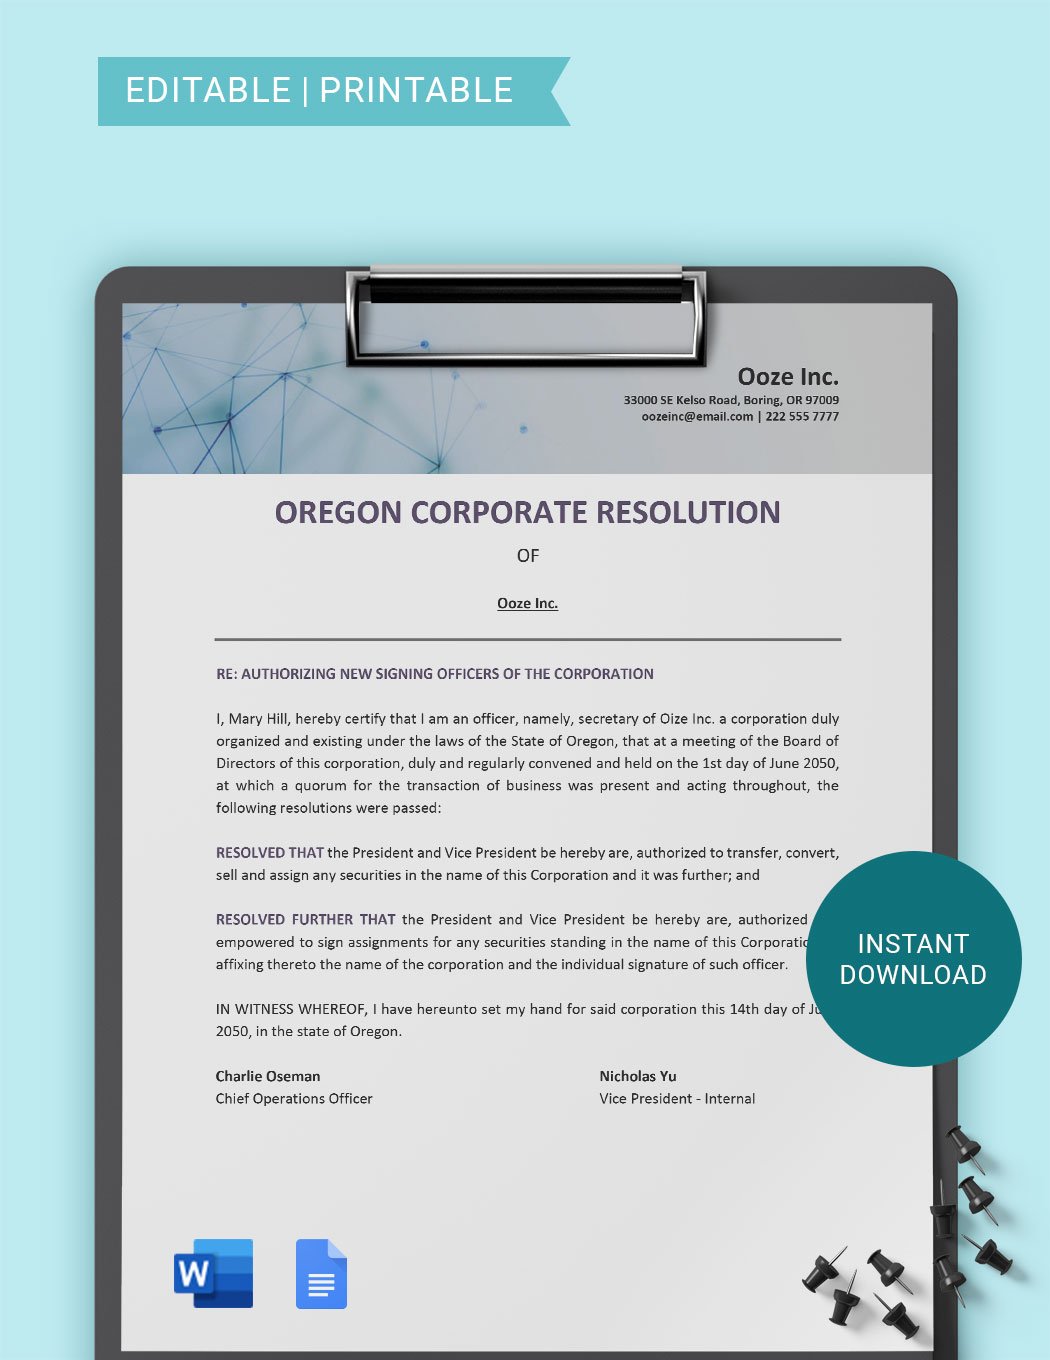 Oregon Corporate Resolution Template in Word, Google Docs